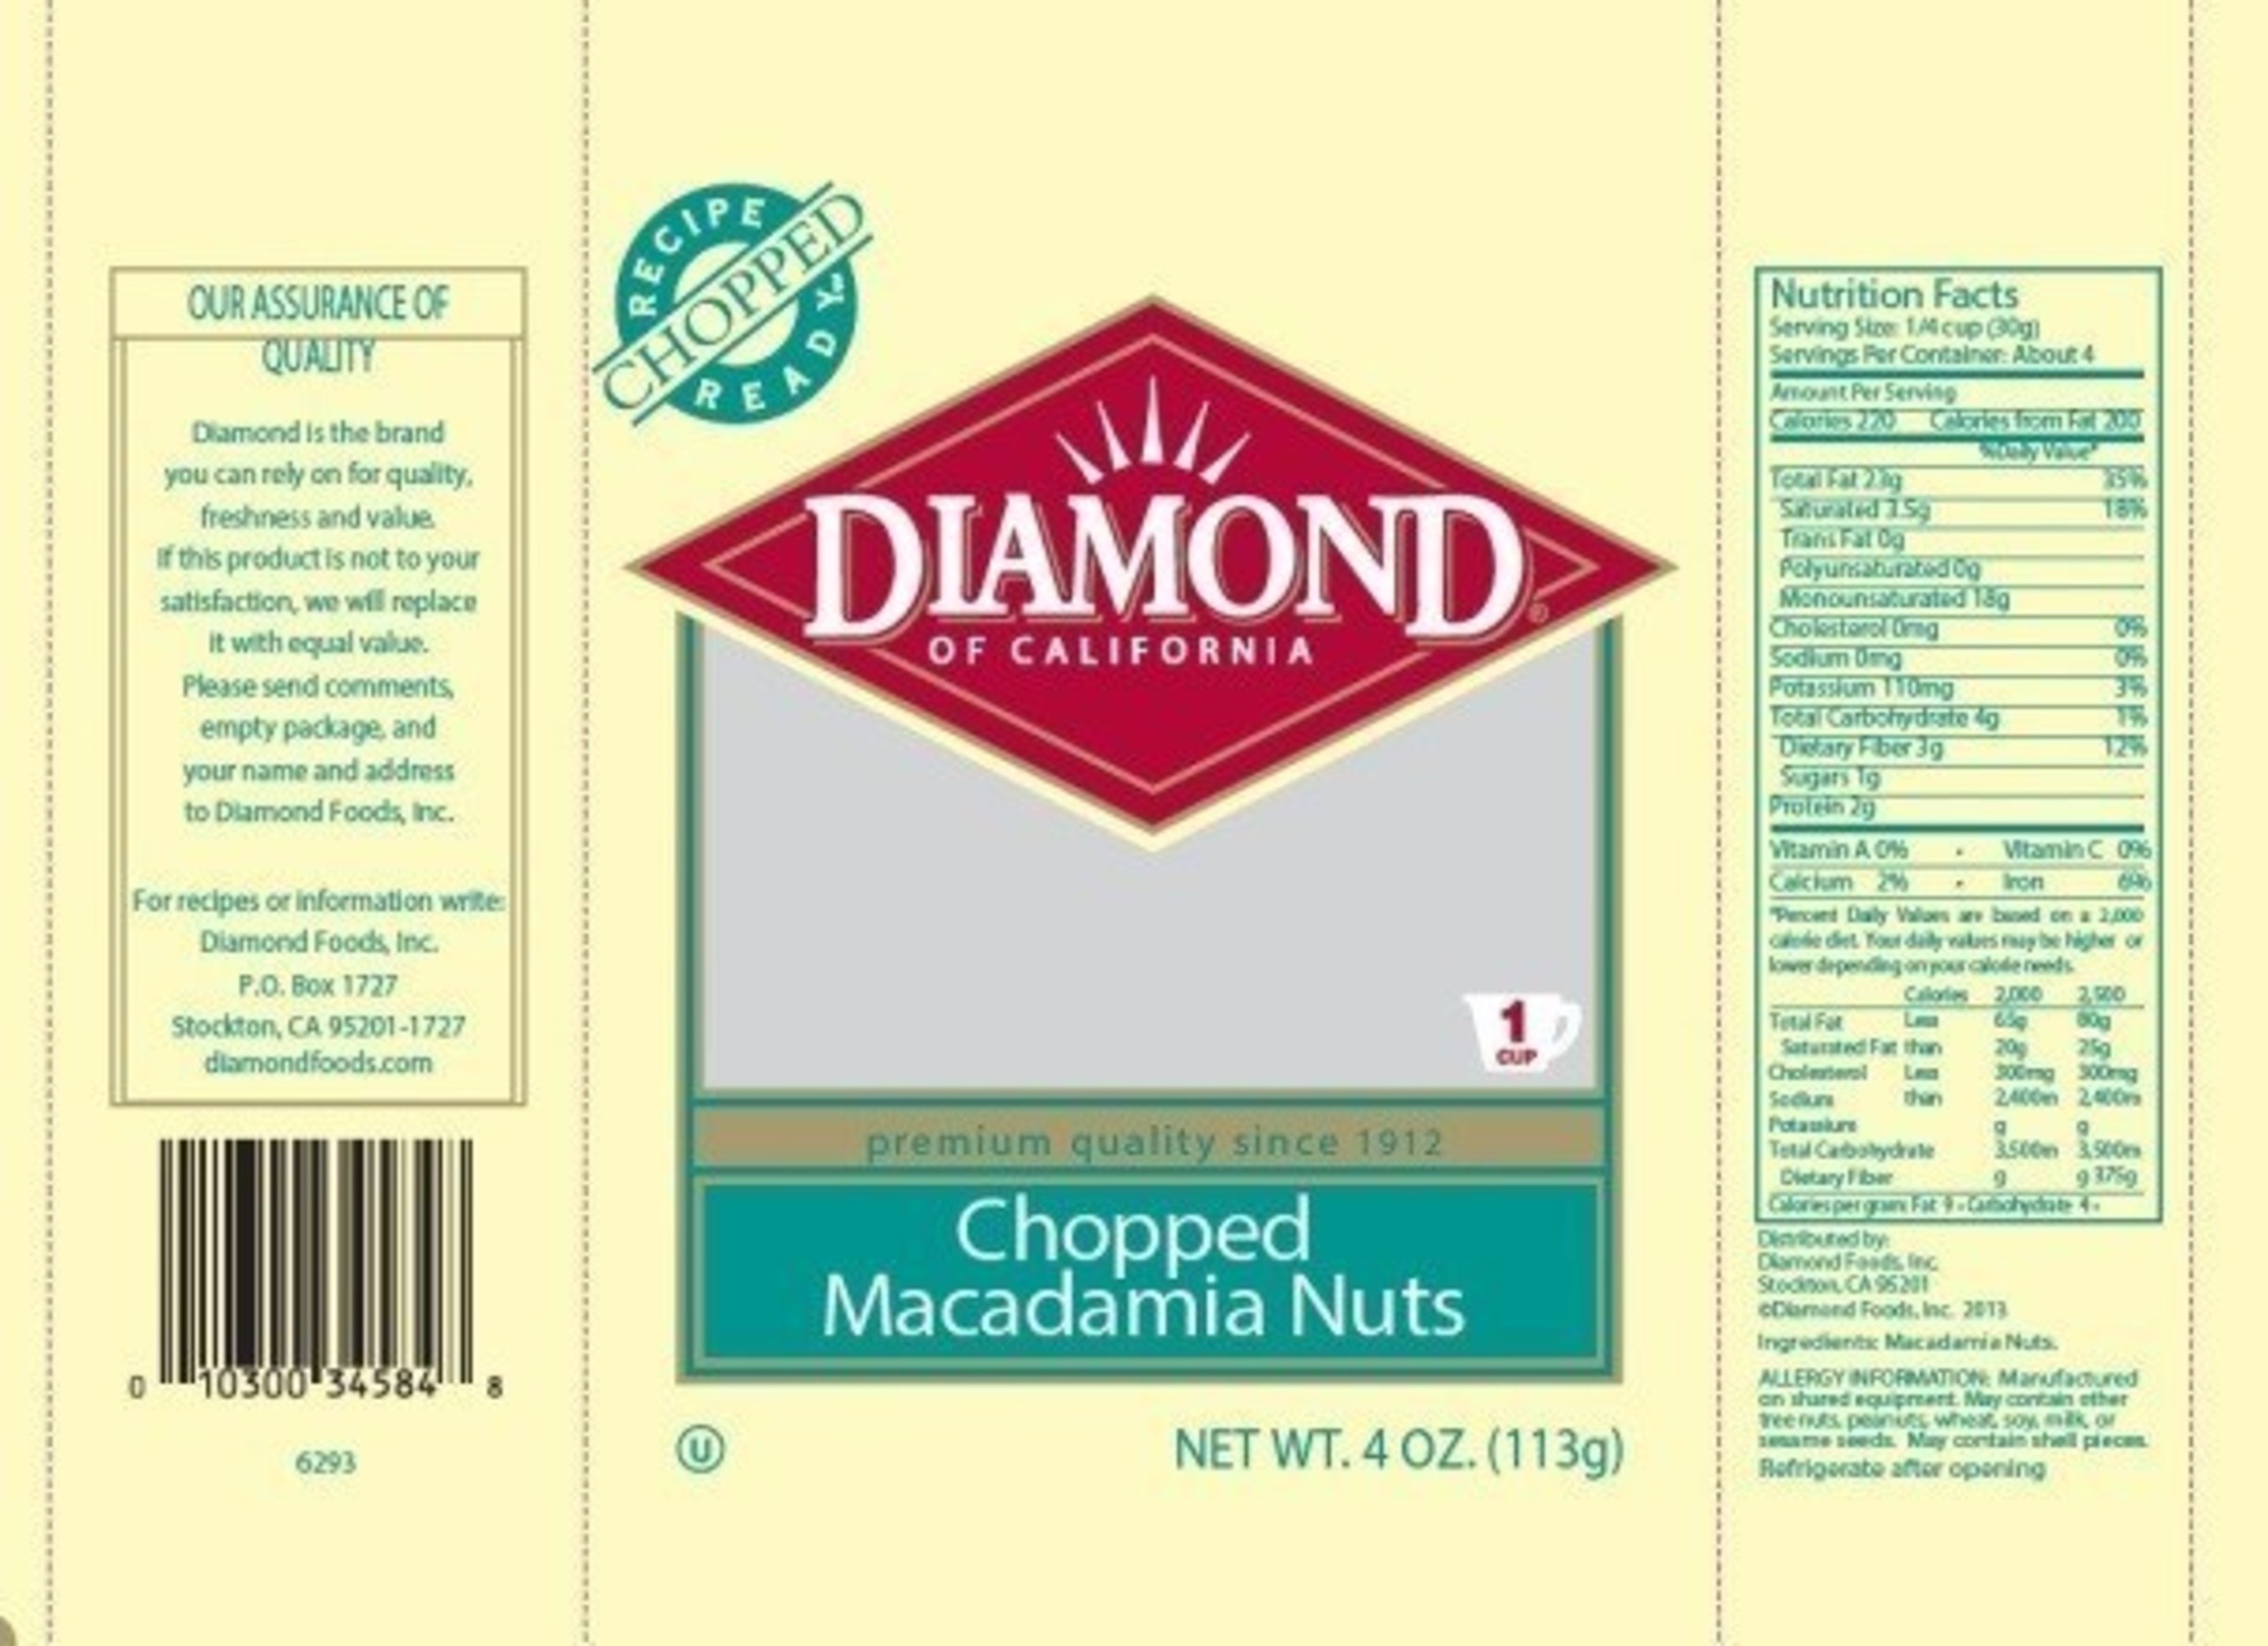 Diamond of California(R) Chopped Macadamia Nuts 4oz packages